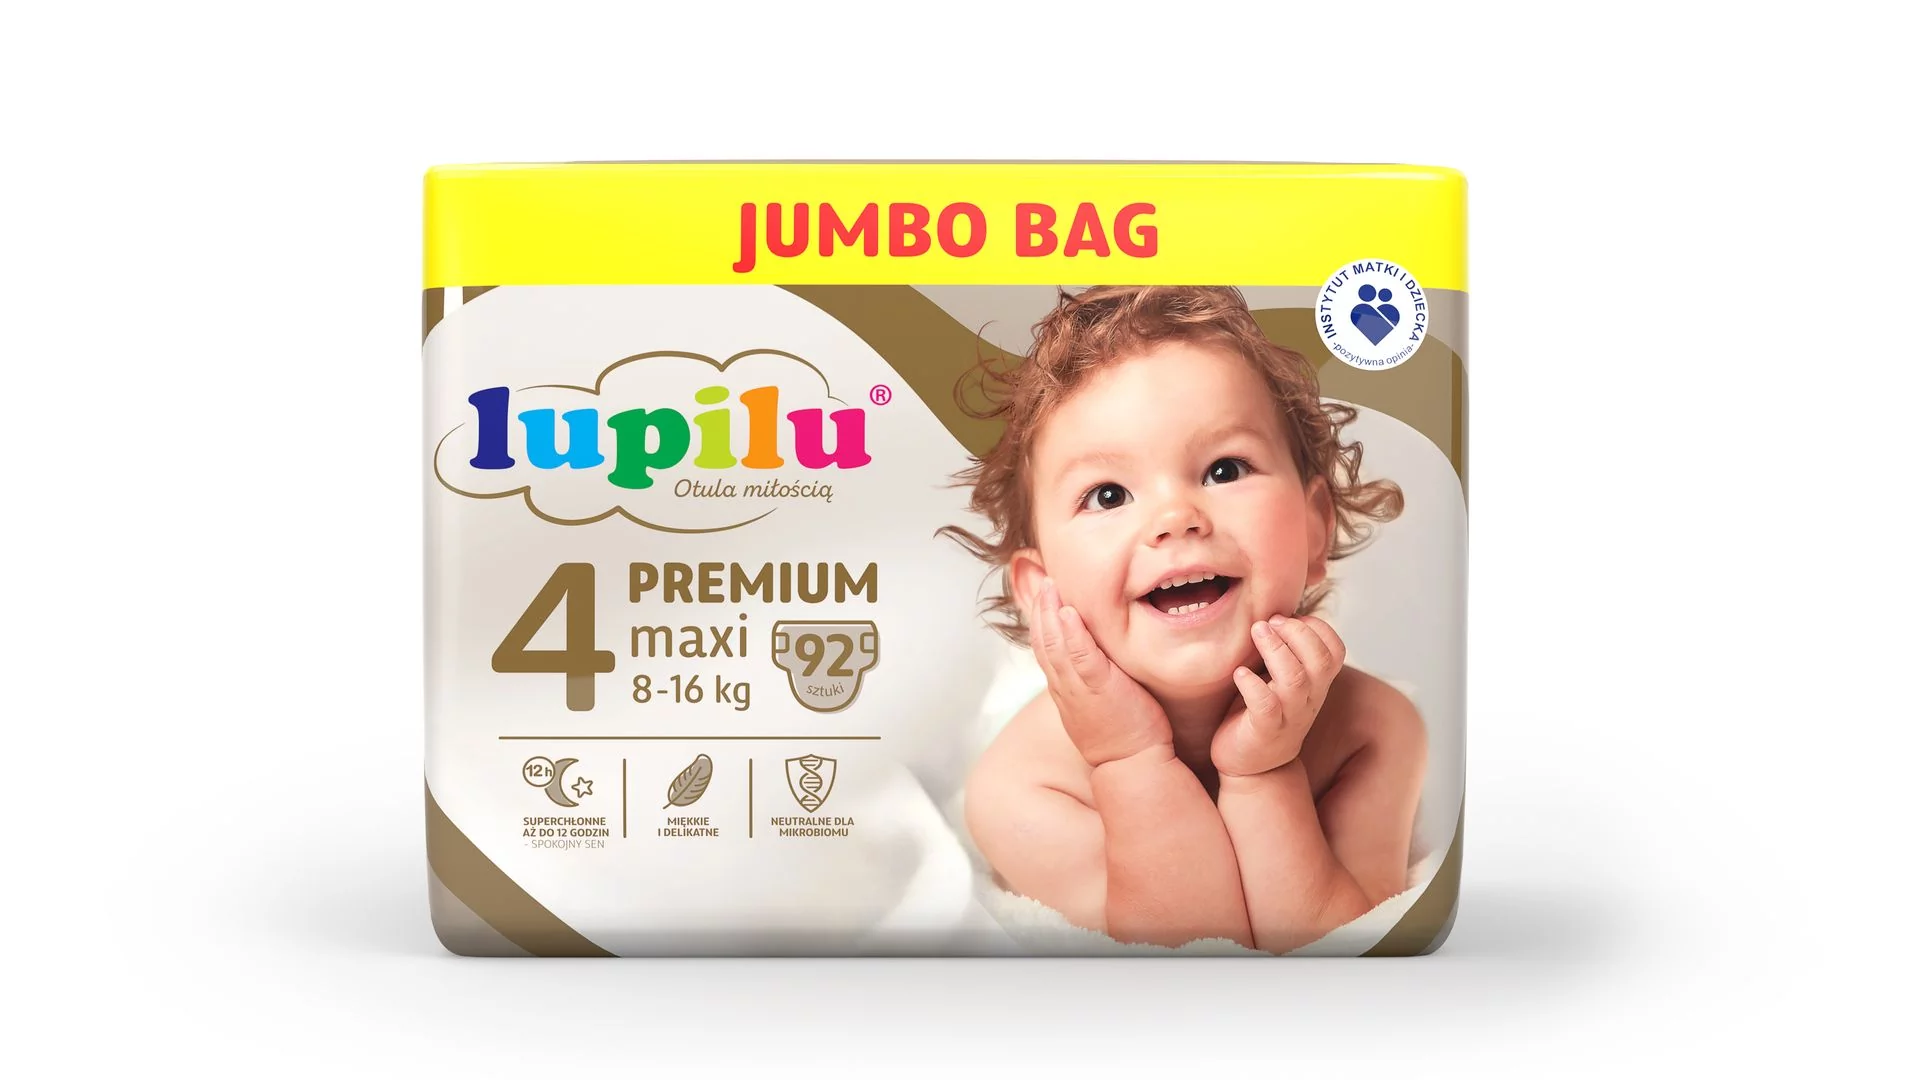 Japońskie (pull-up diapers) pieluchomajtki Merries PBL 12-22kg 44szt